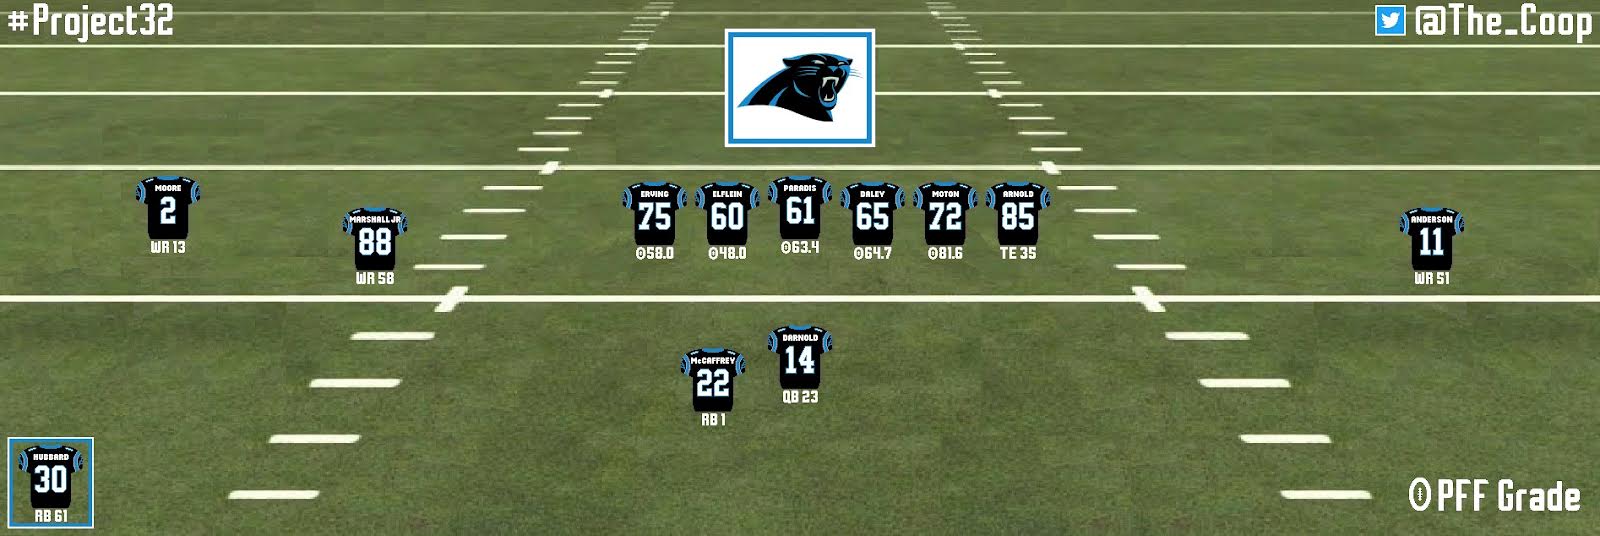 Carolina Panthers 2021 projections